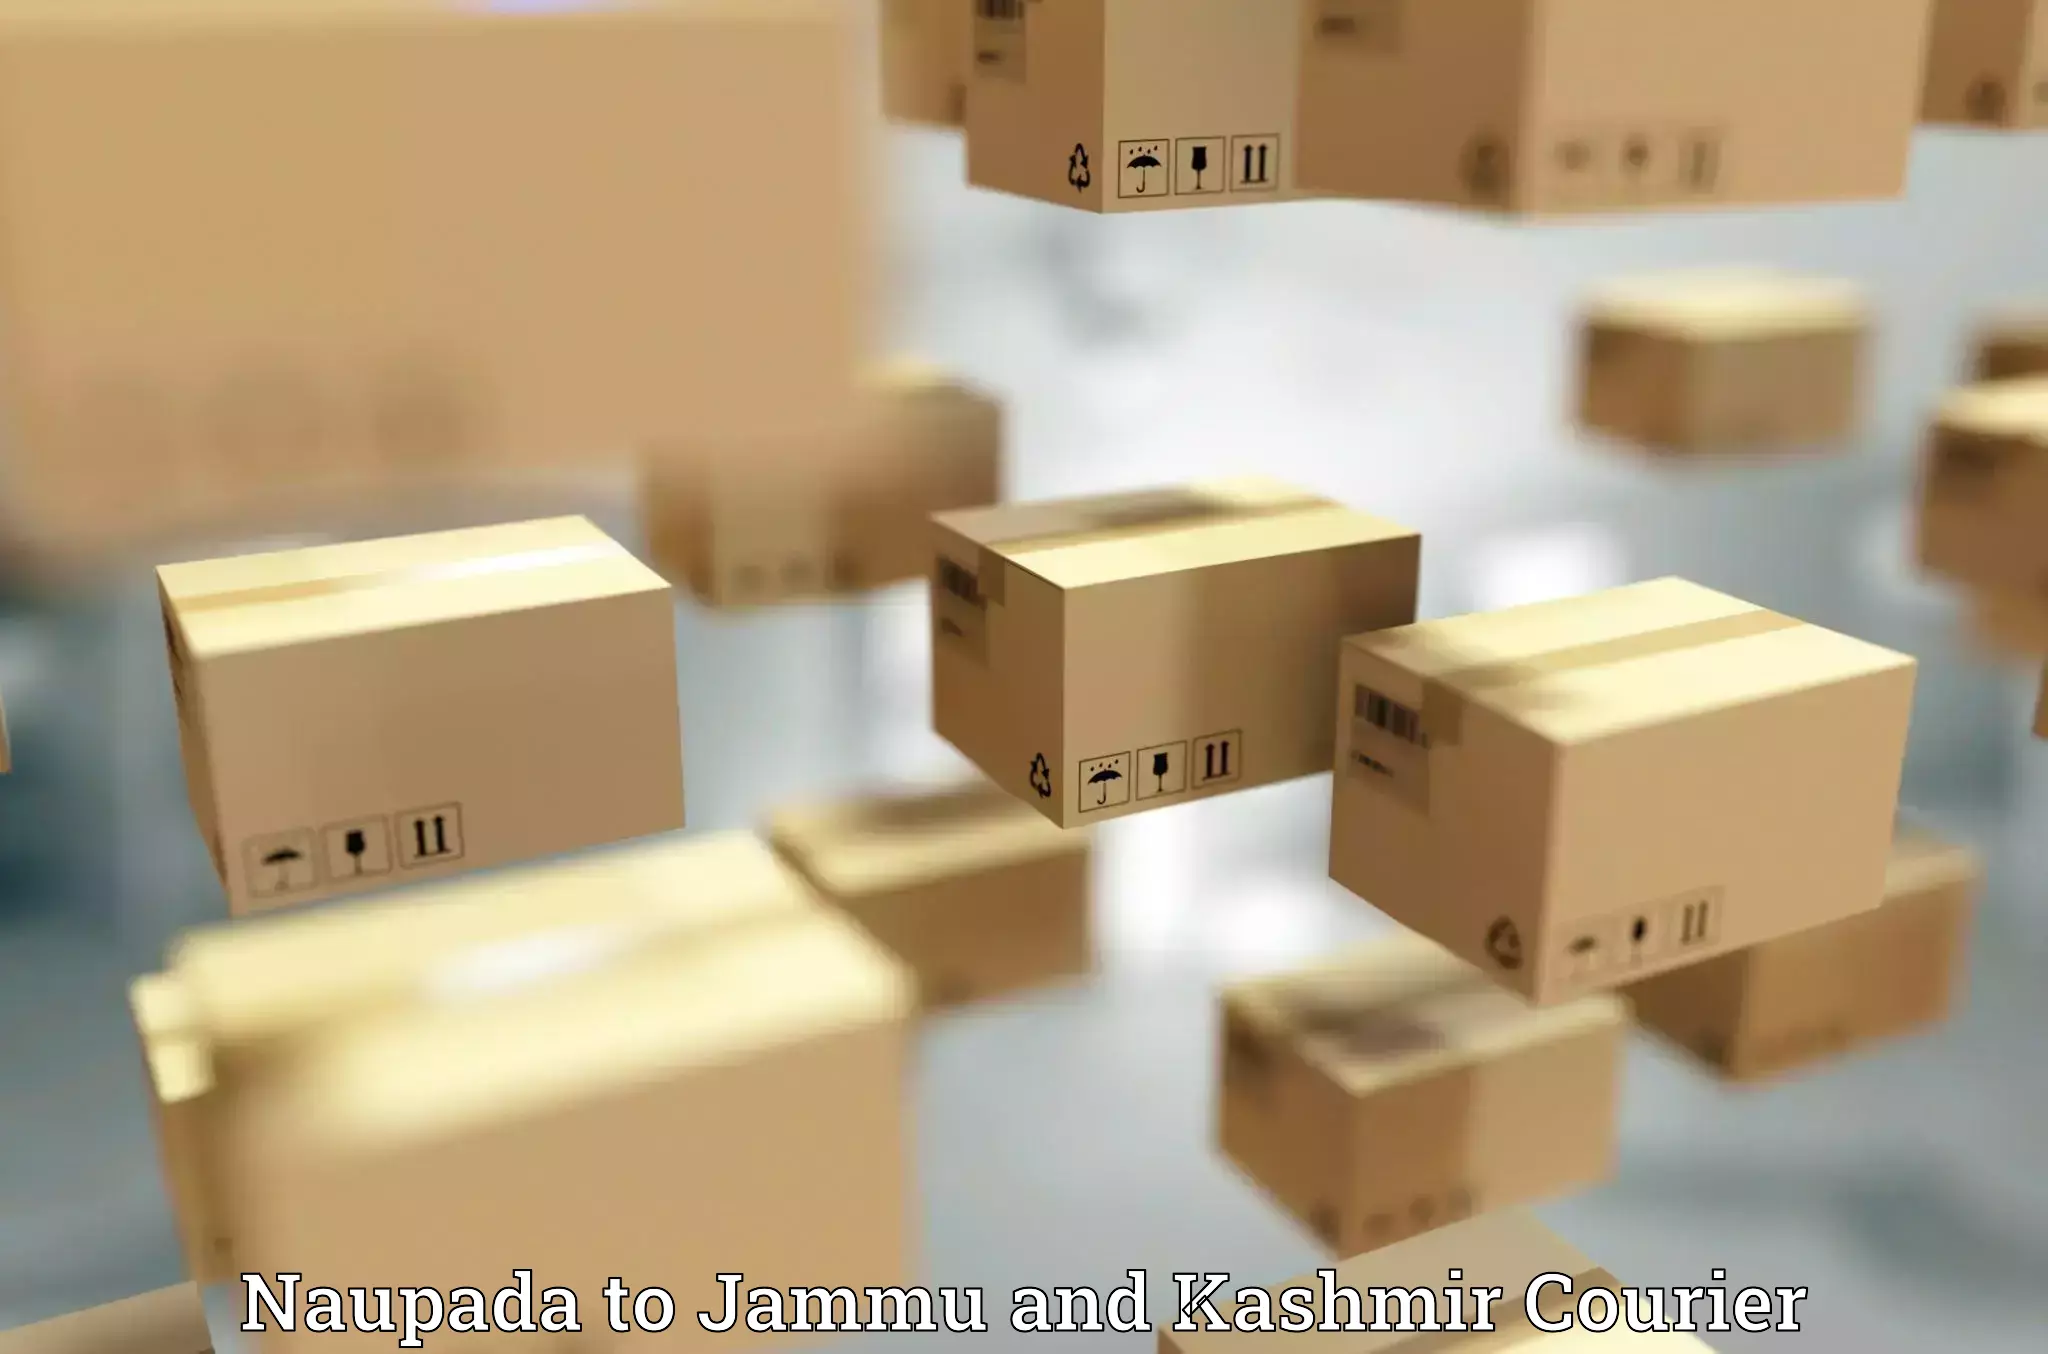 Global courier networks Naupada to Jammu and Kashmir